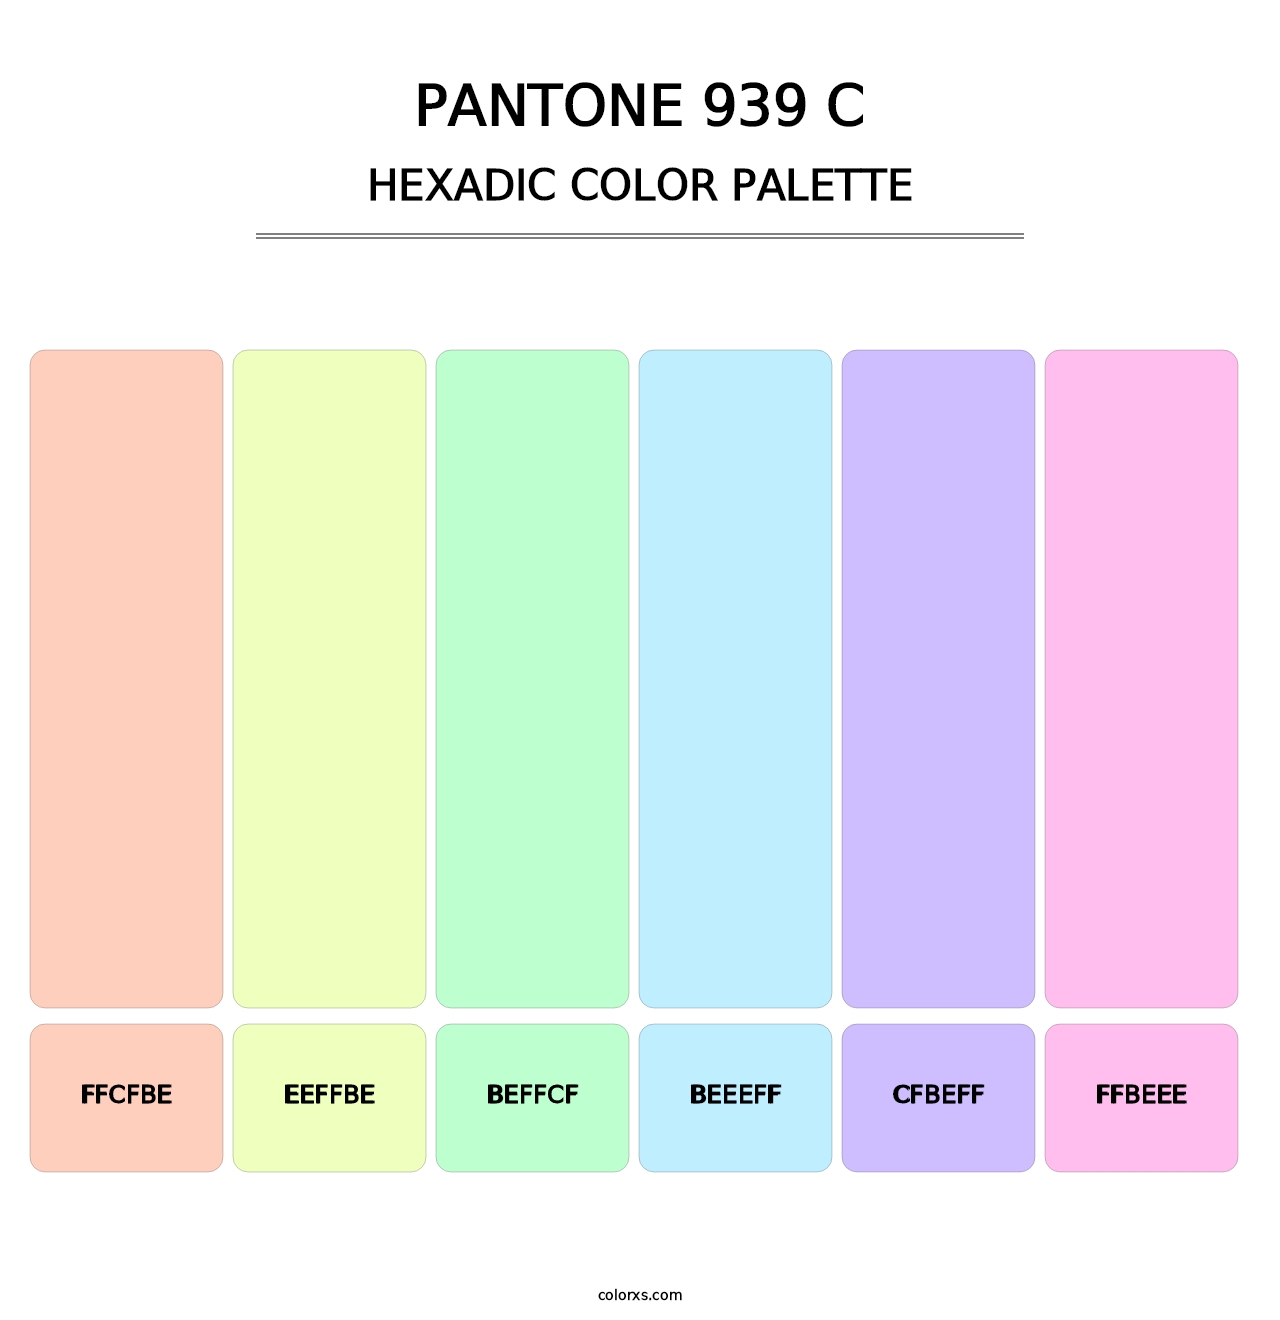 PANTONE 939 C - Hexadic Color Palette